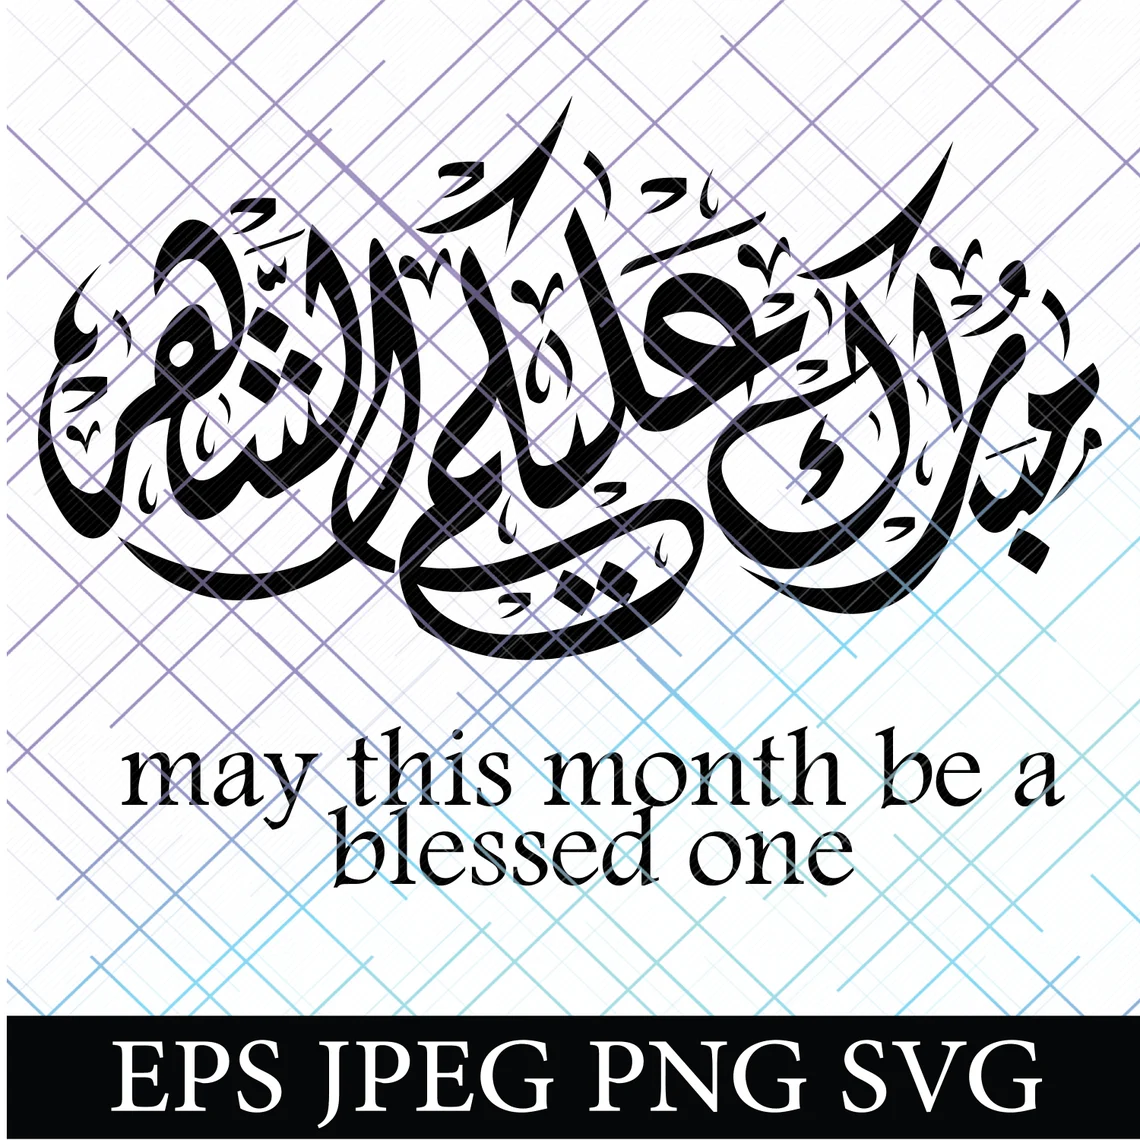 Ramadan kareem SVG.